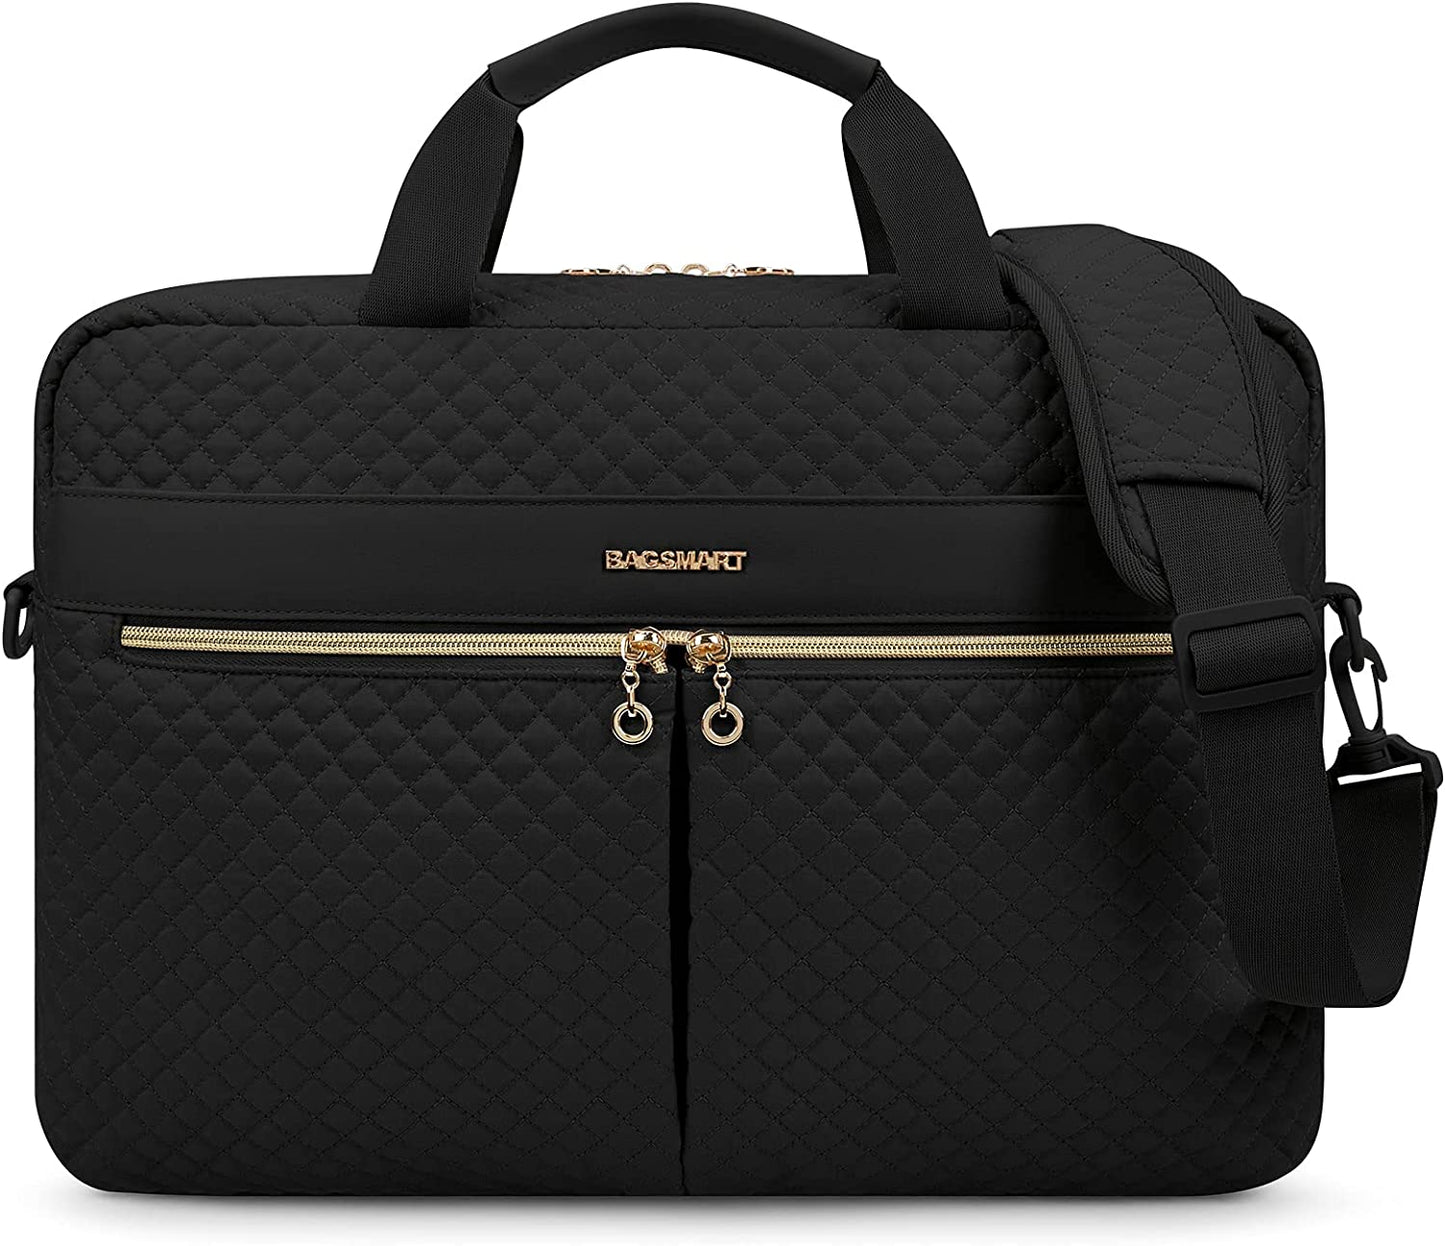 17.3 Inch Laptop Bag,BAGSMART Briefcase for Women Large Laptop Case Computer Bag Office Travel Business